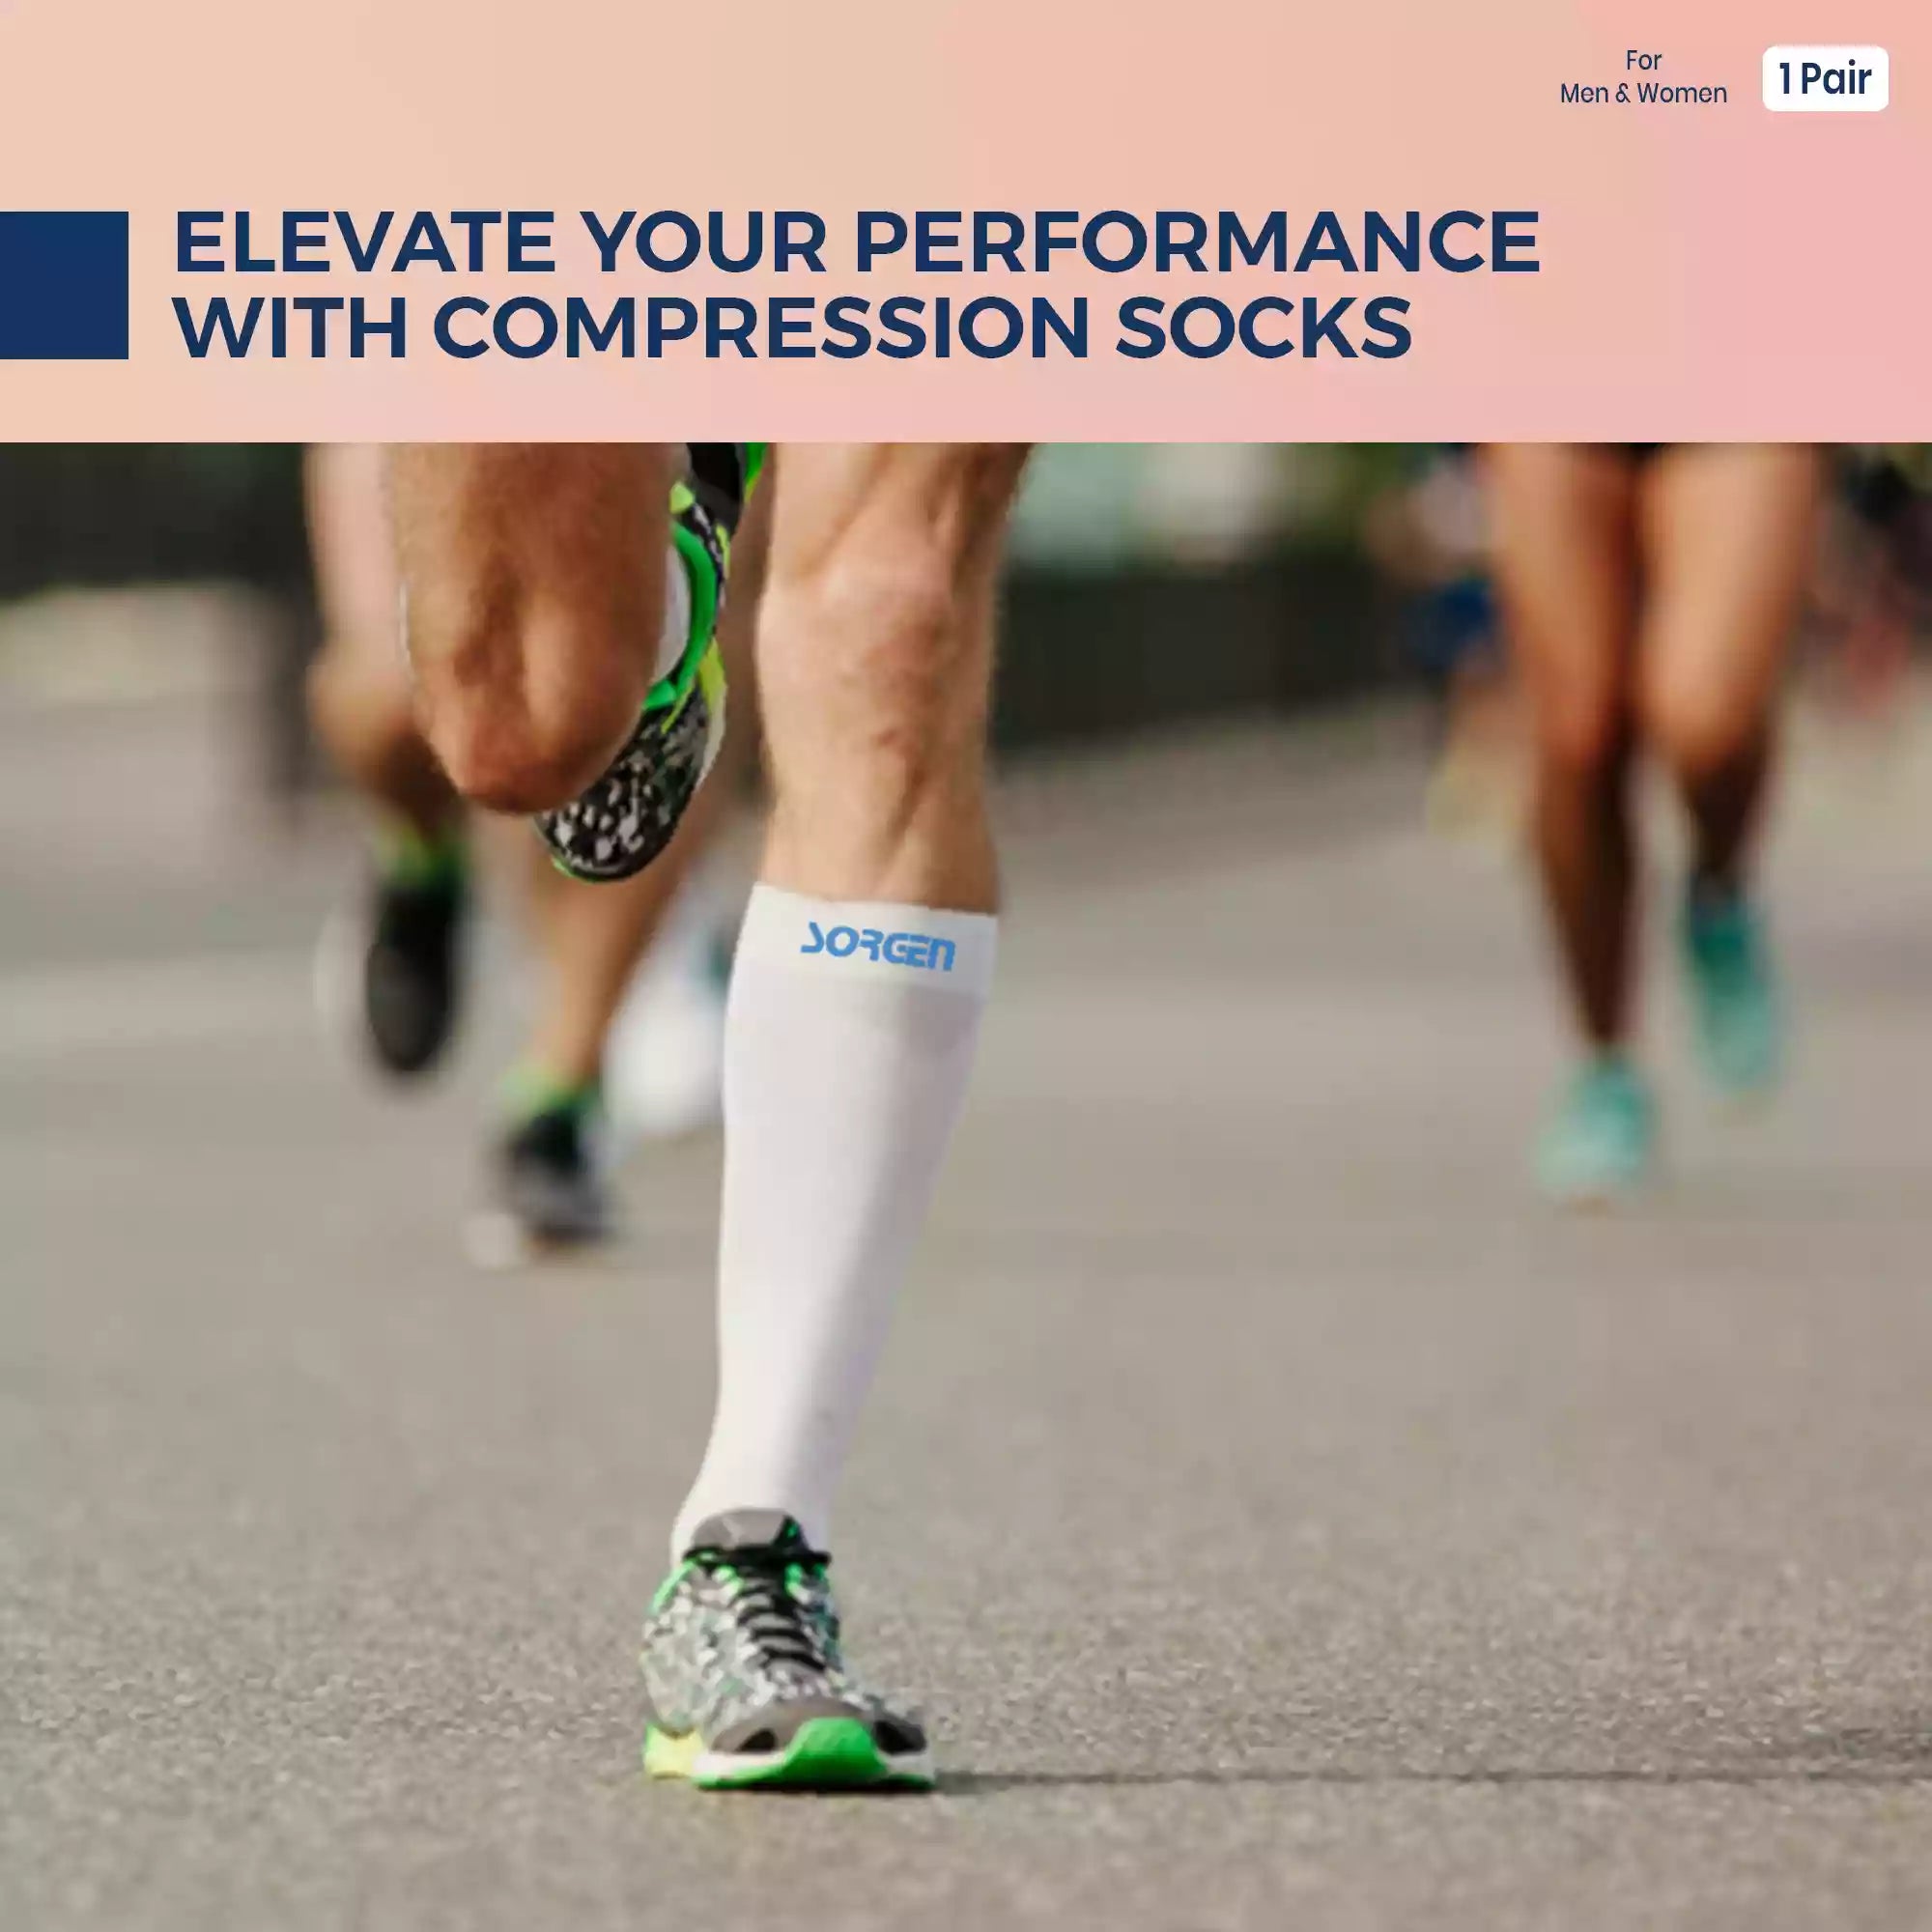 Sorgen® Compression Sports Socks or Athletic Socks